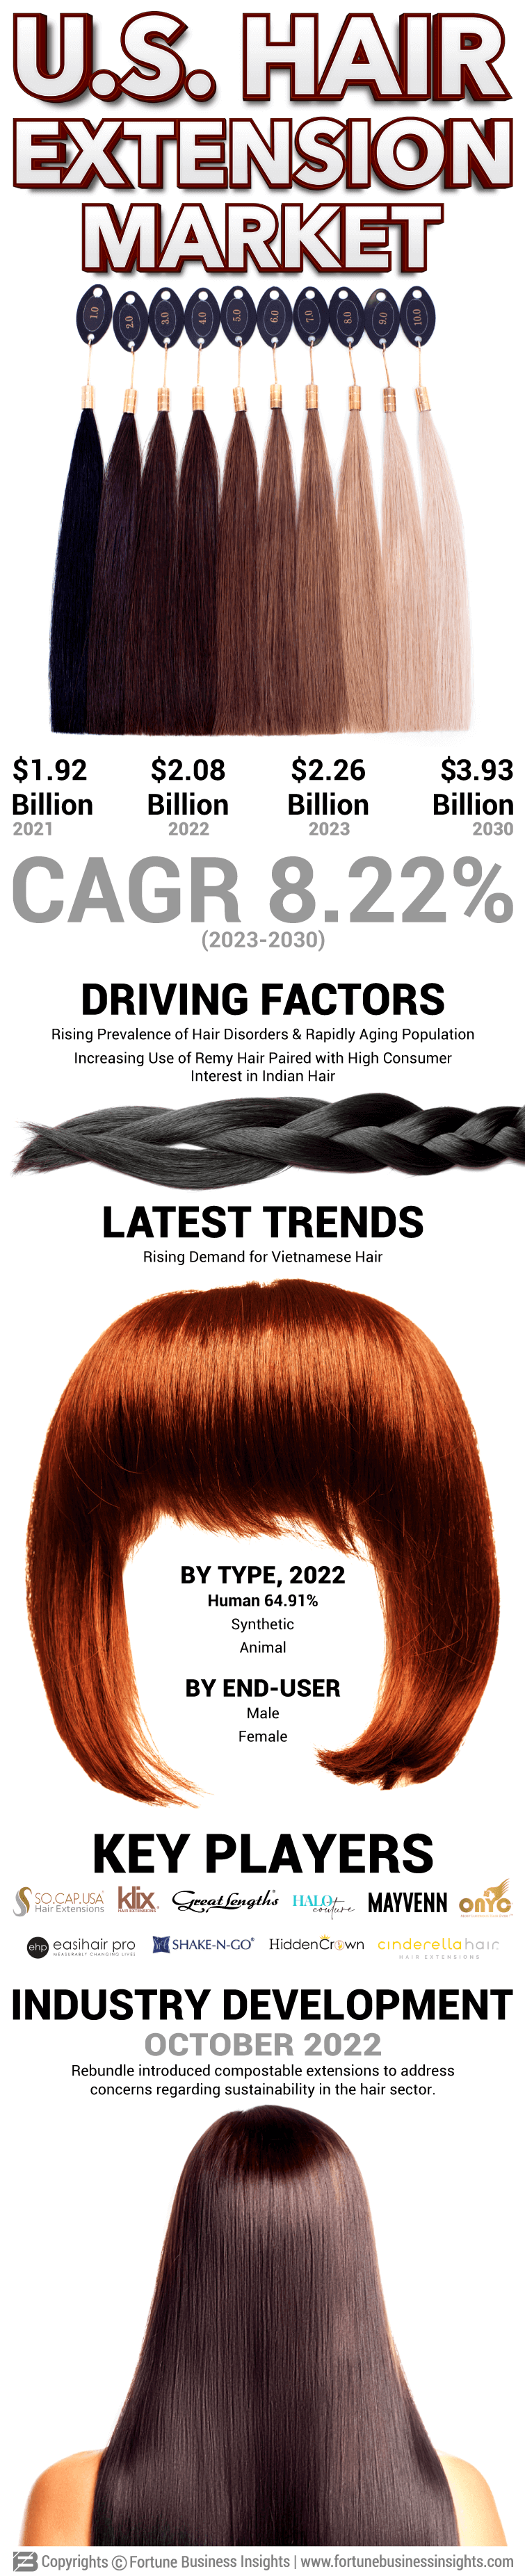 U.S. Hair Extension Market